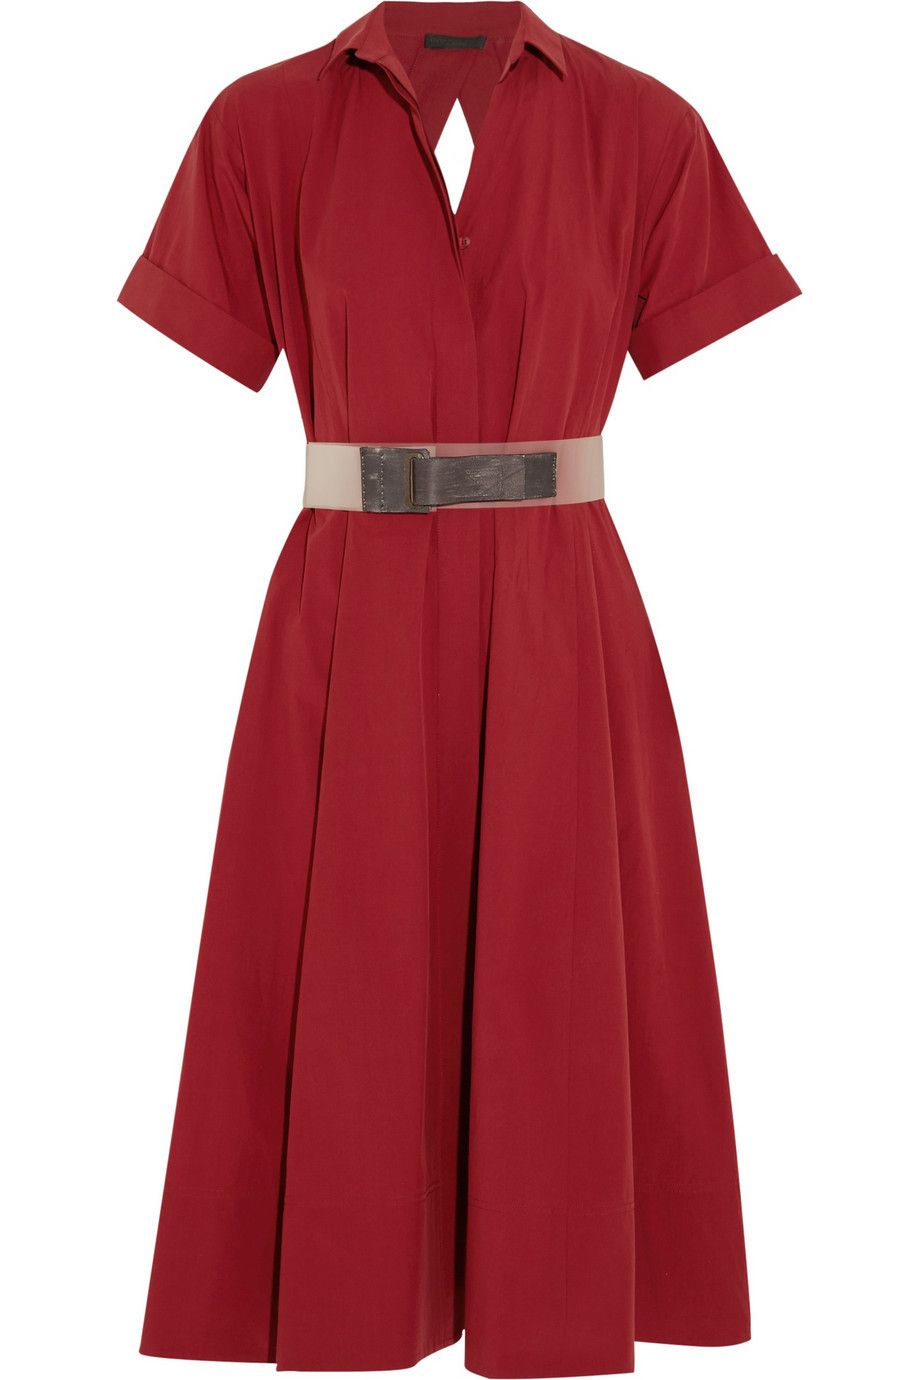 Product, Collar, Sleeve, Red, Textile, Dress, Maroon, Carmine, Uniform, Pattern, 